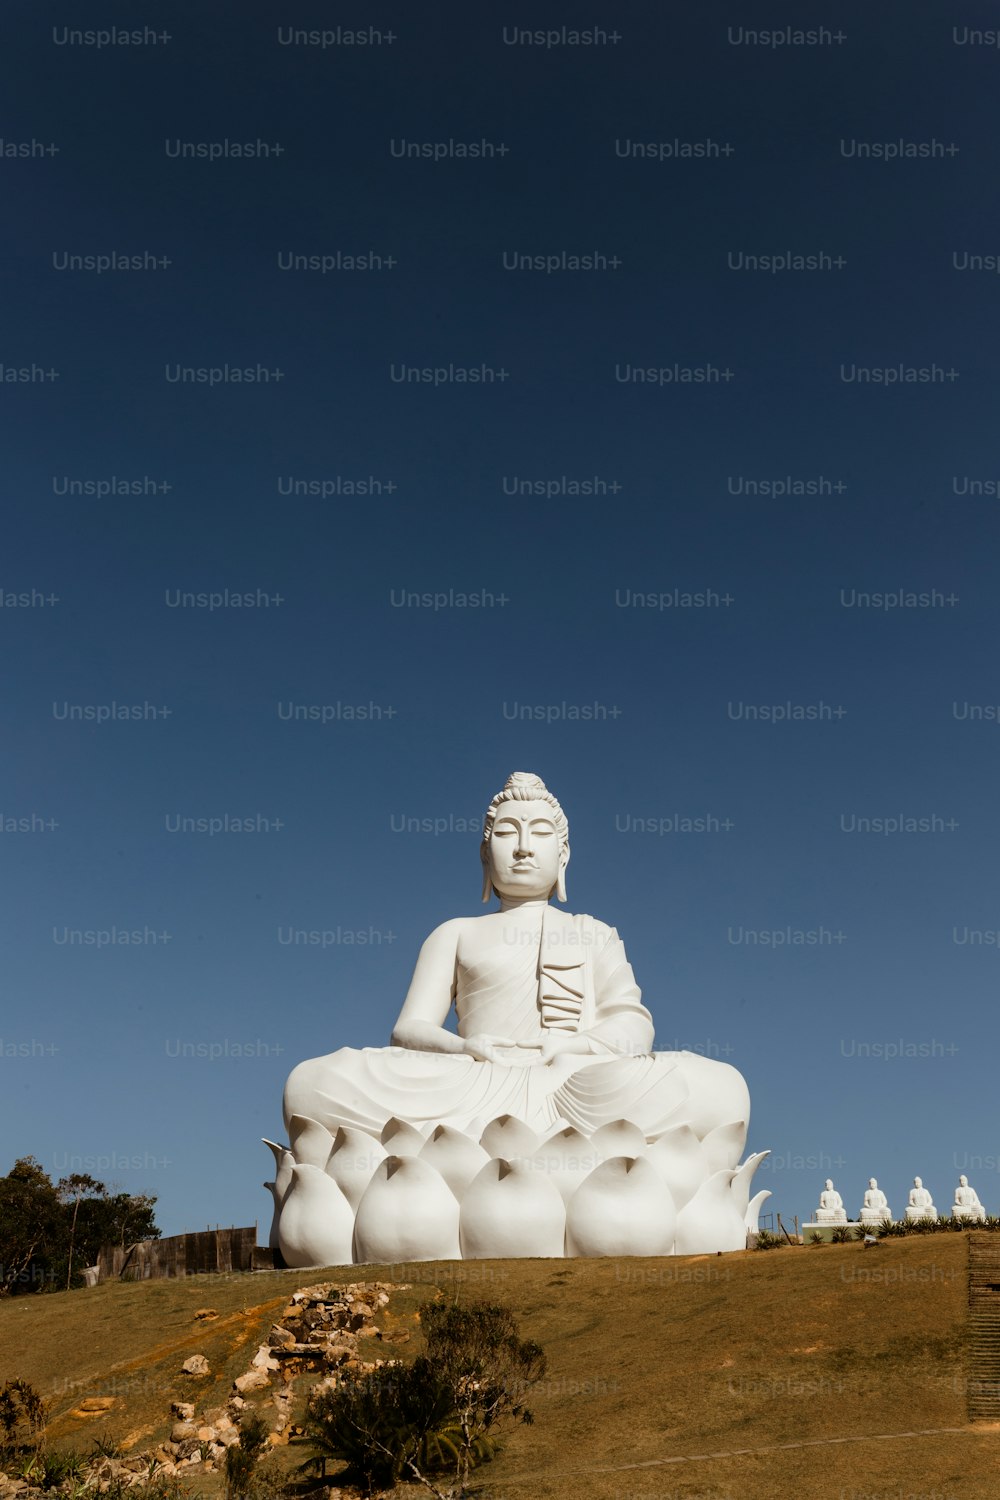 Una gran estatua blanca de Buda sentada en la cima de una colina